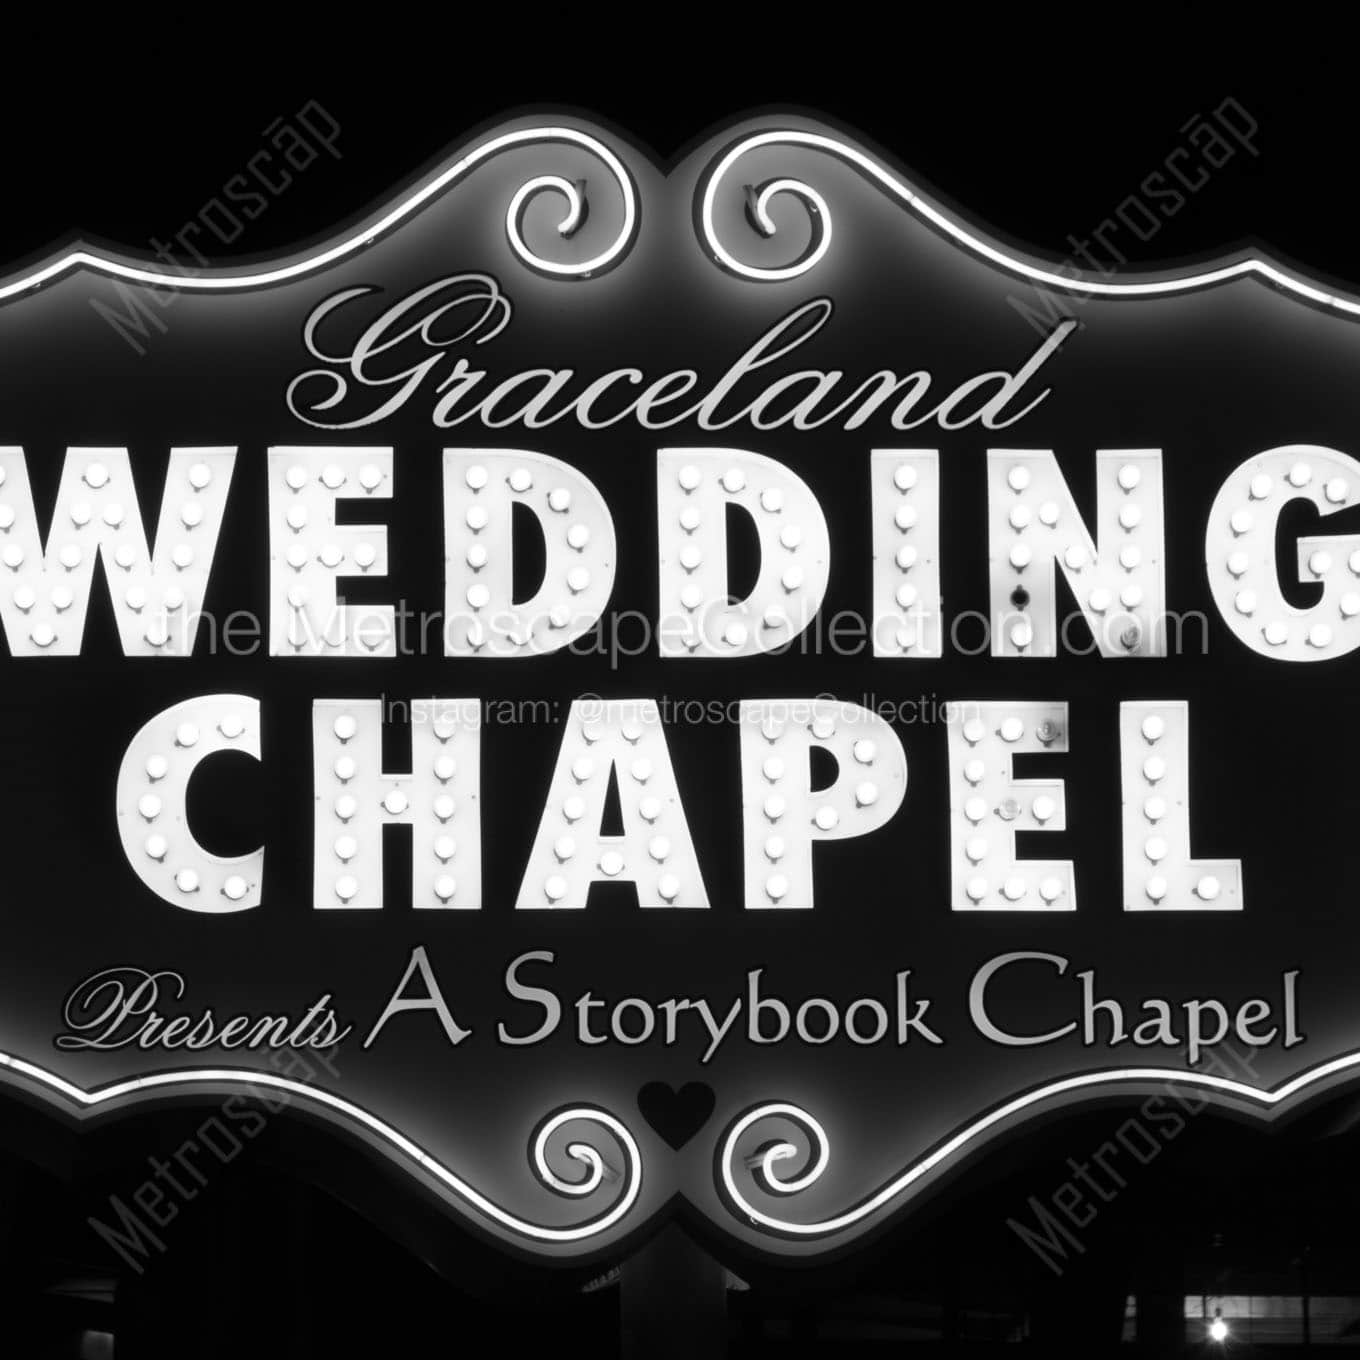 graceland wedding chapel at night Black & White Office Art